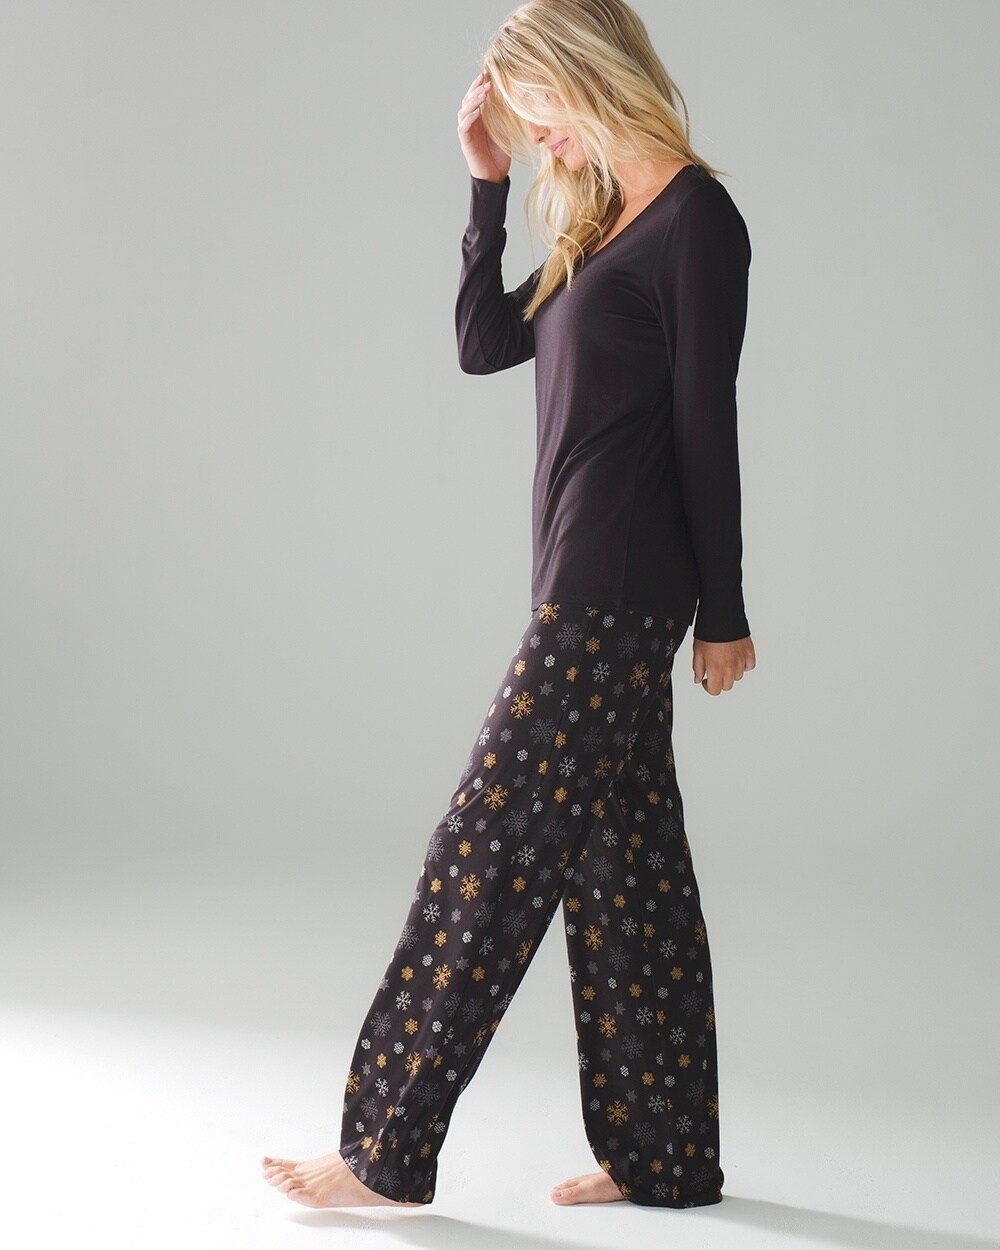  Soma Pajamas Sets For Women Cool Nights